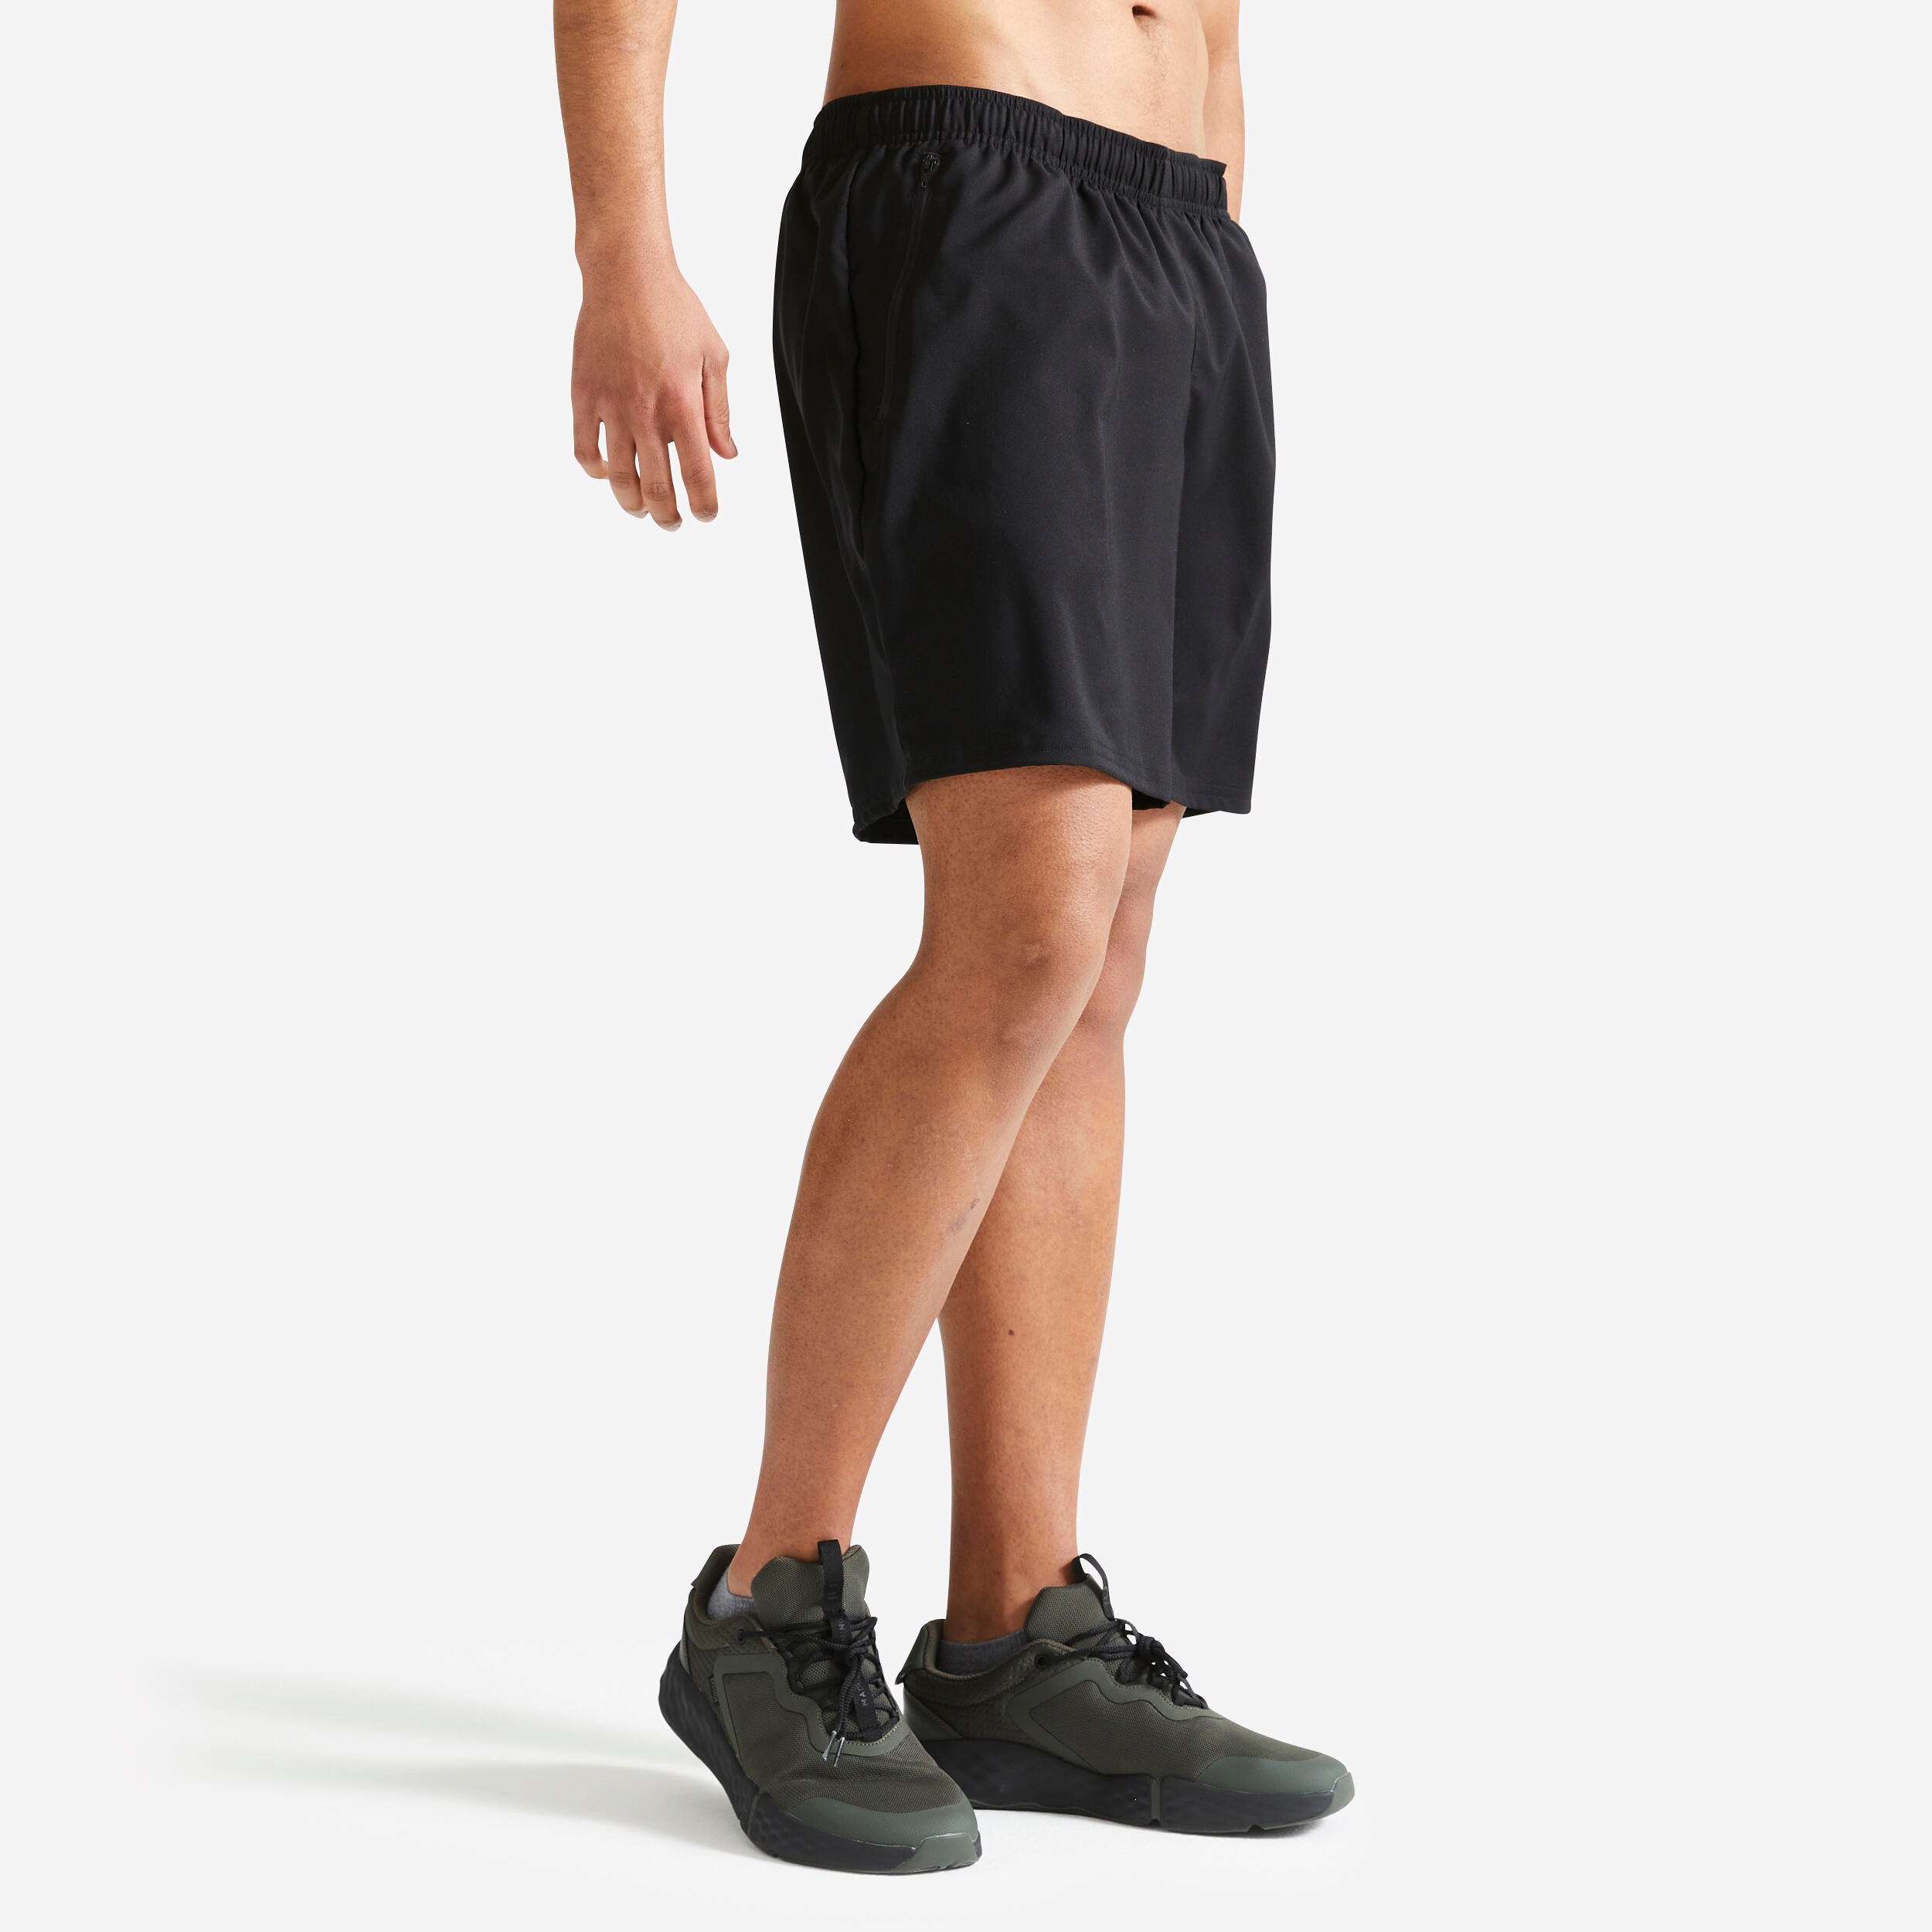 DOMYOS Men's Breathable Breathable Fitness Shorts - Black